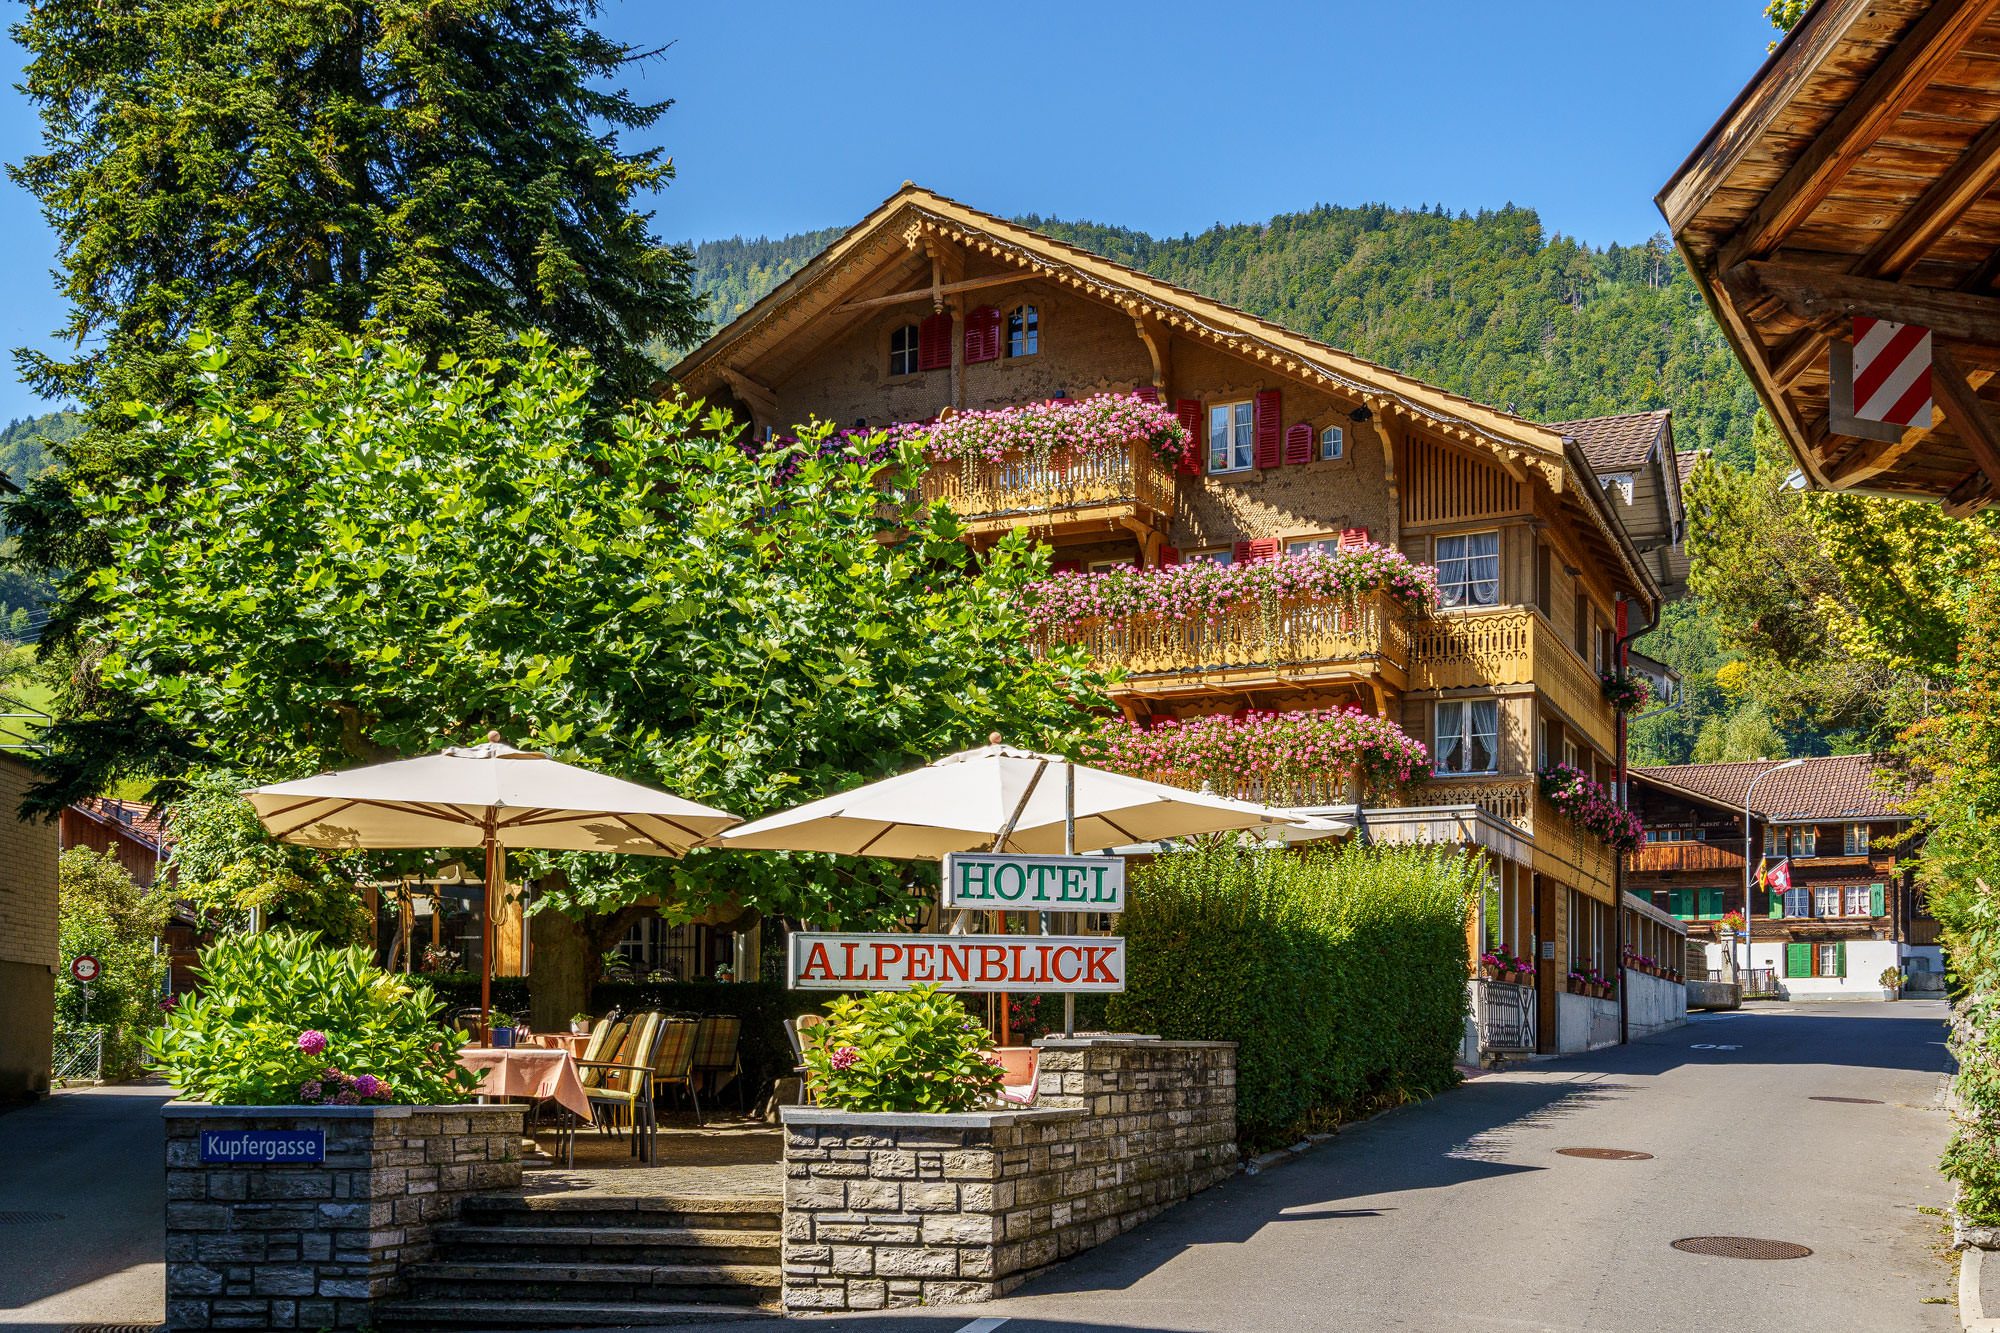 Hotel Alpenblick Wilderswil - MAMO Photography Fotograf Interlaken Bern Schweiz